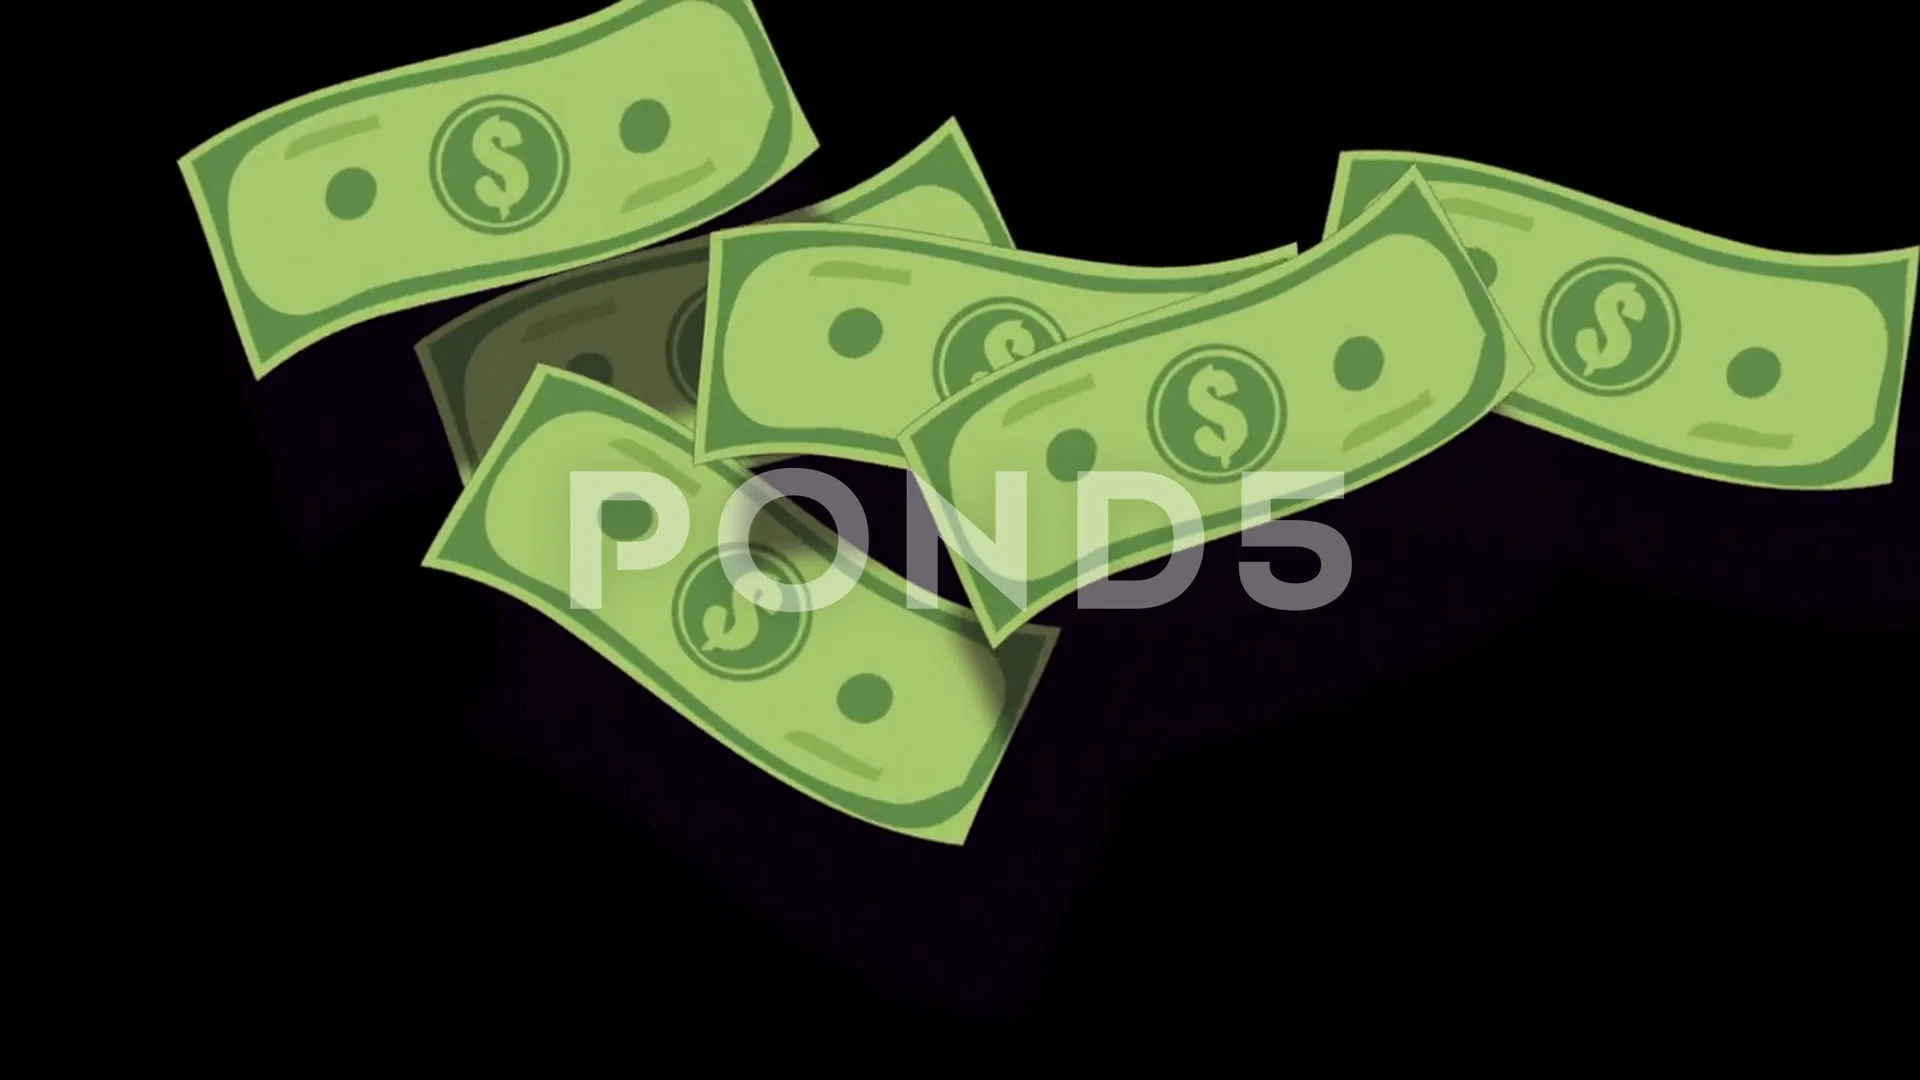 falling money animation powerpoint